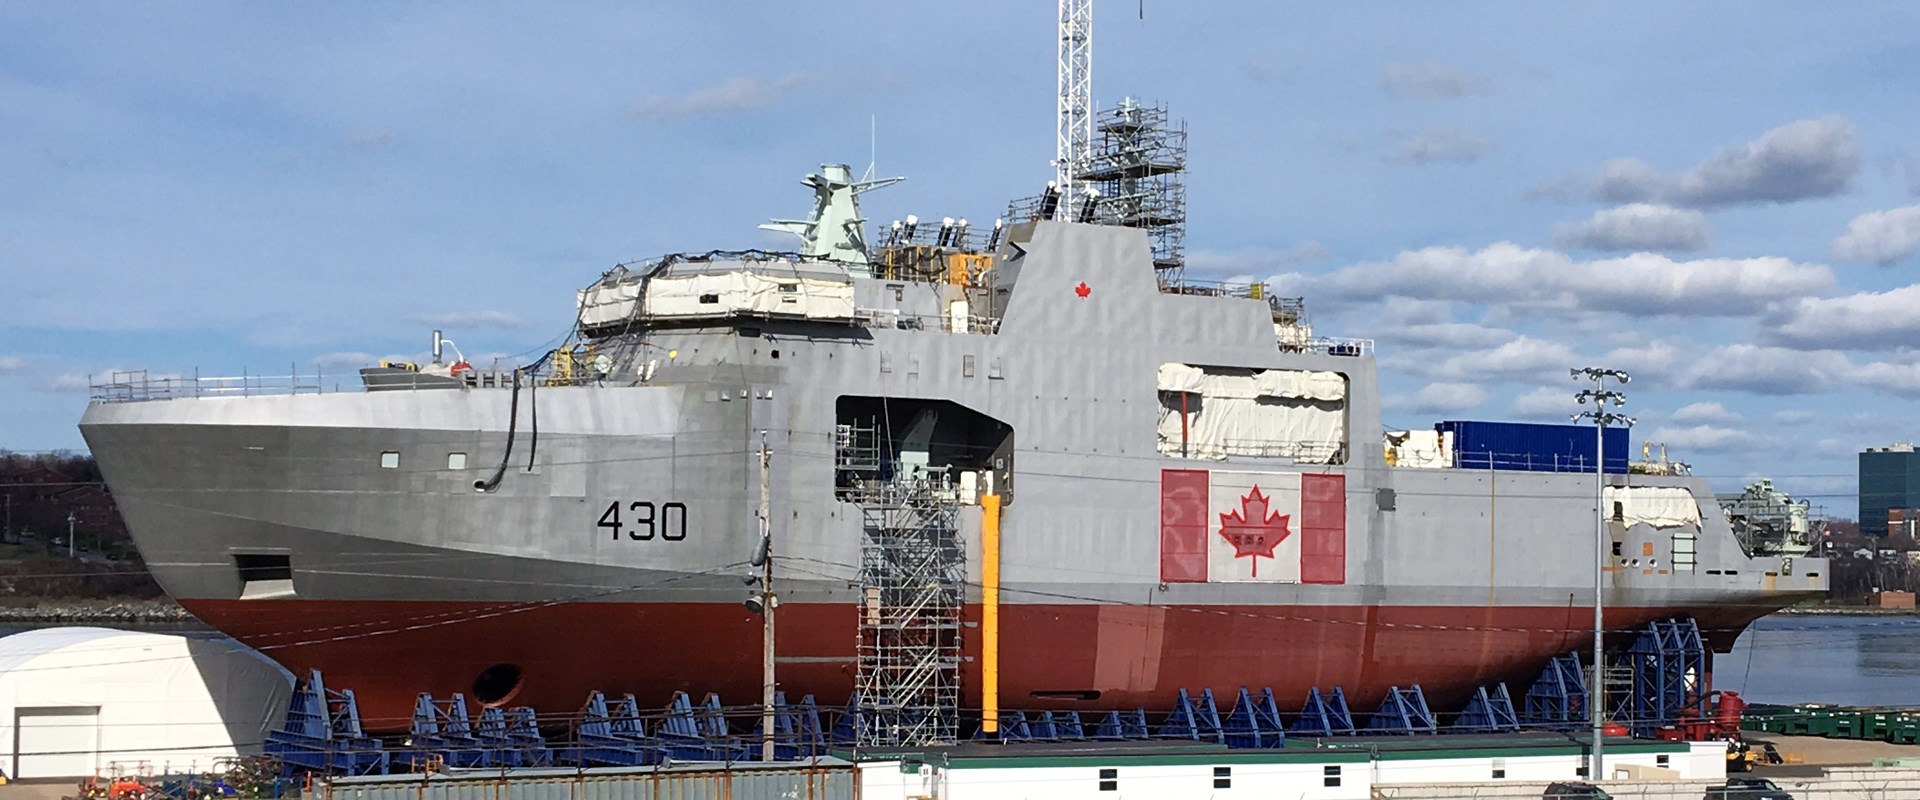 HMCS Harry Dewolf under construction